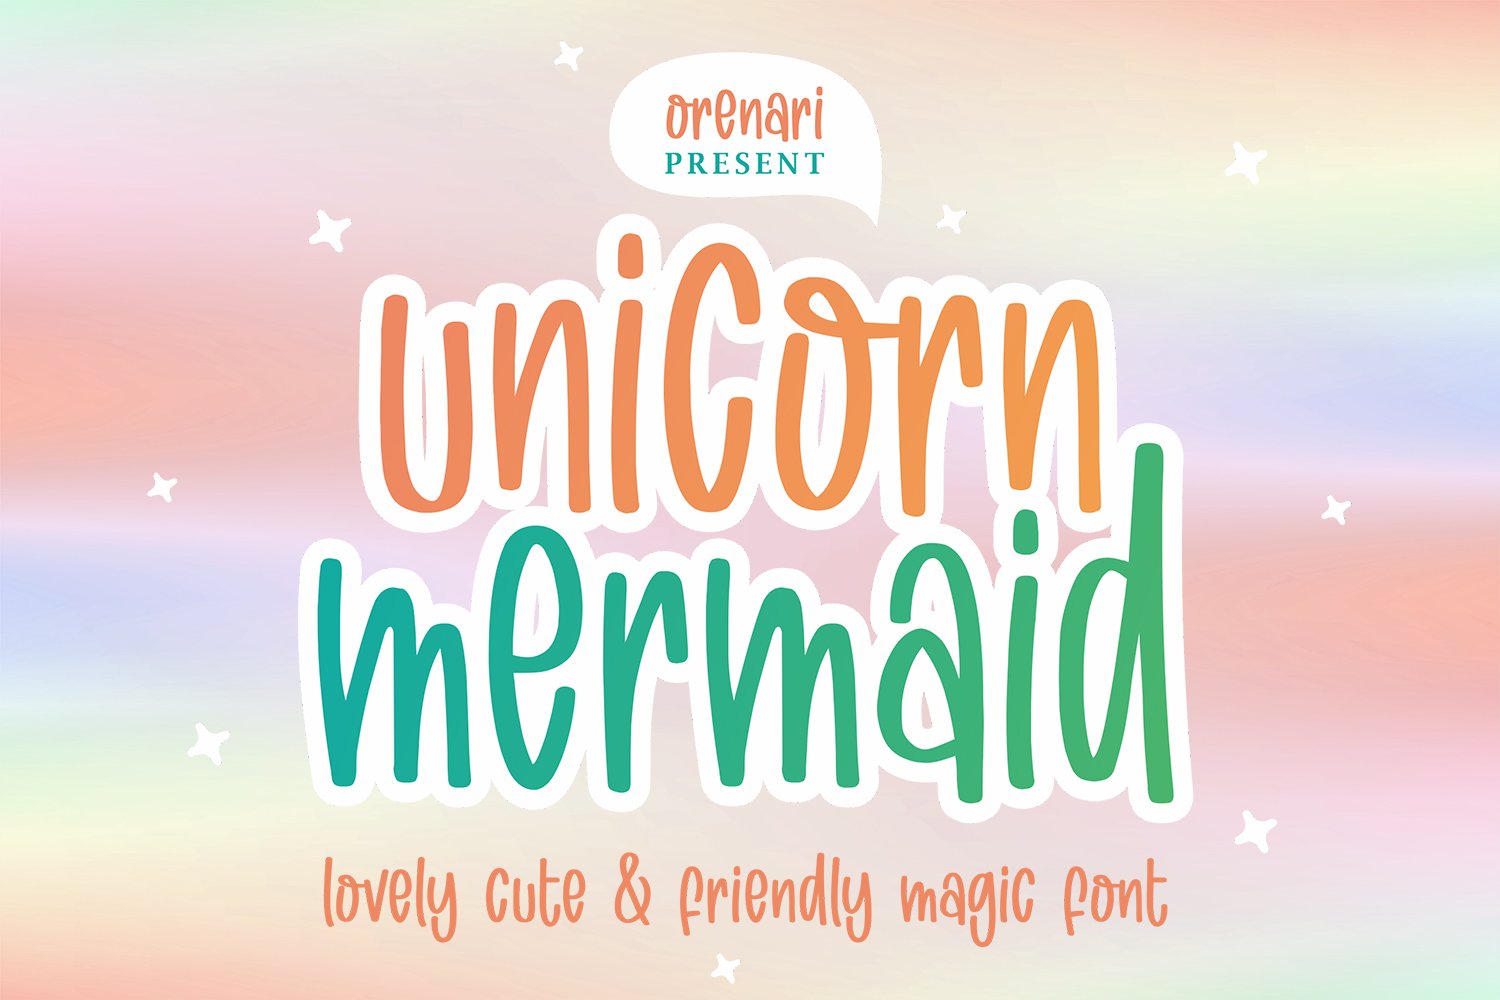 Unicorn Mermaid cover image.